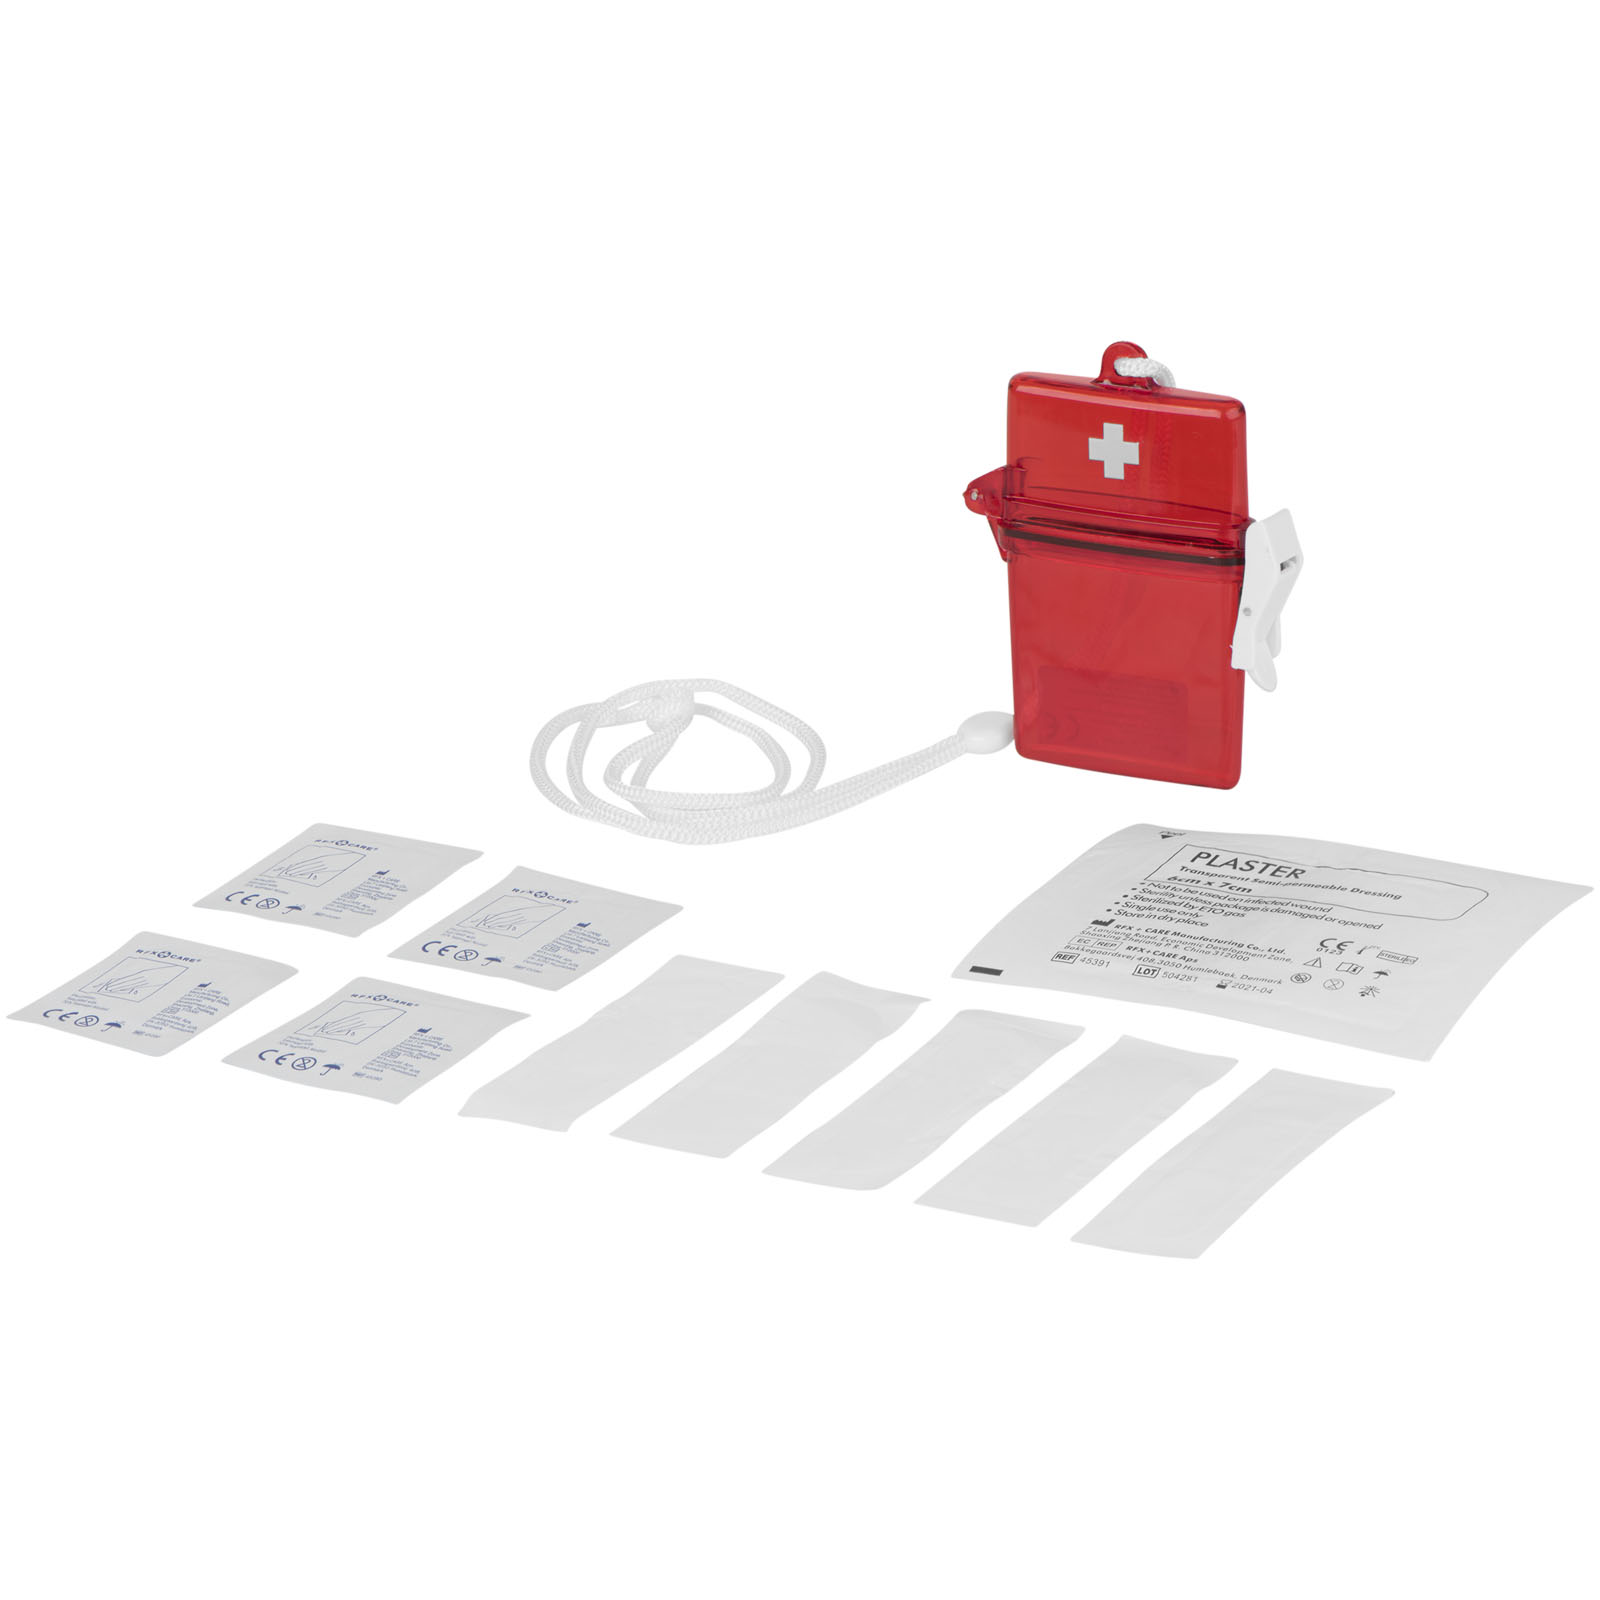 First Aid Kit in Transparent Red Box - Harlow/Sawbridgeworth